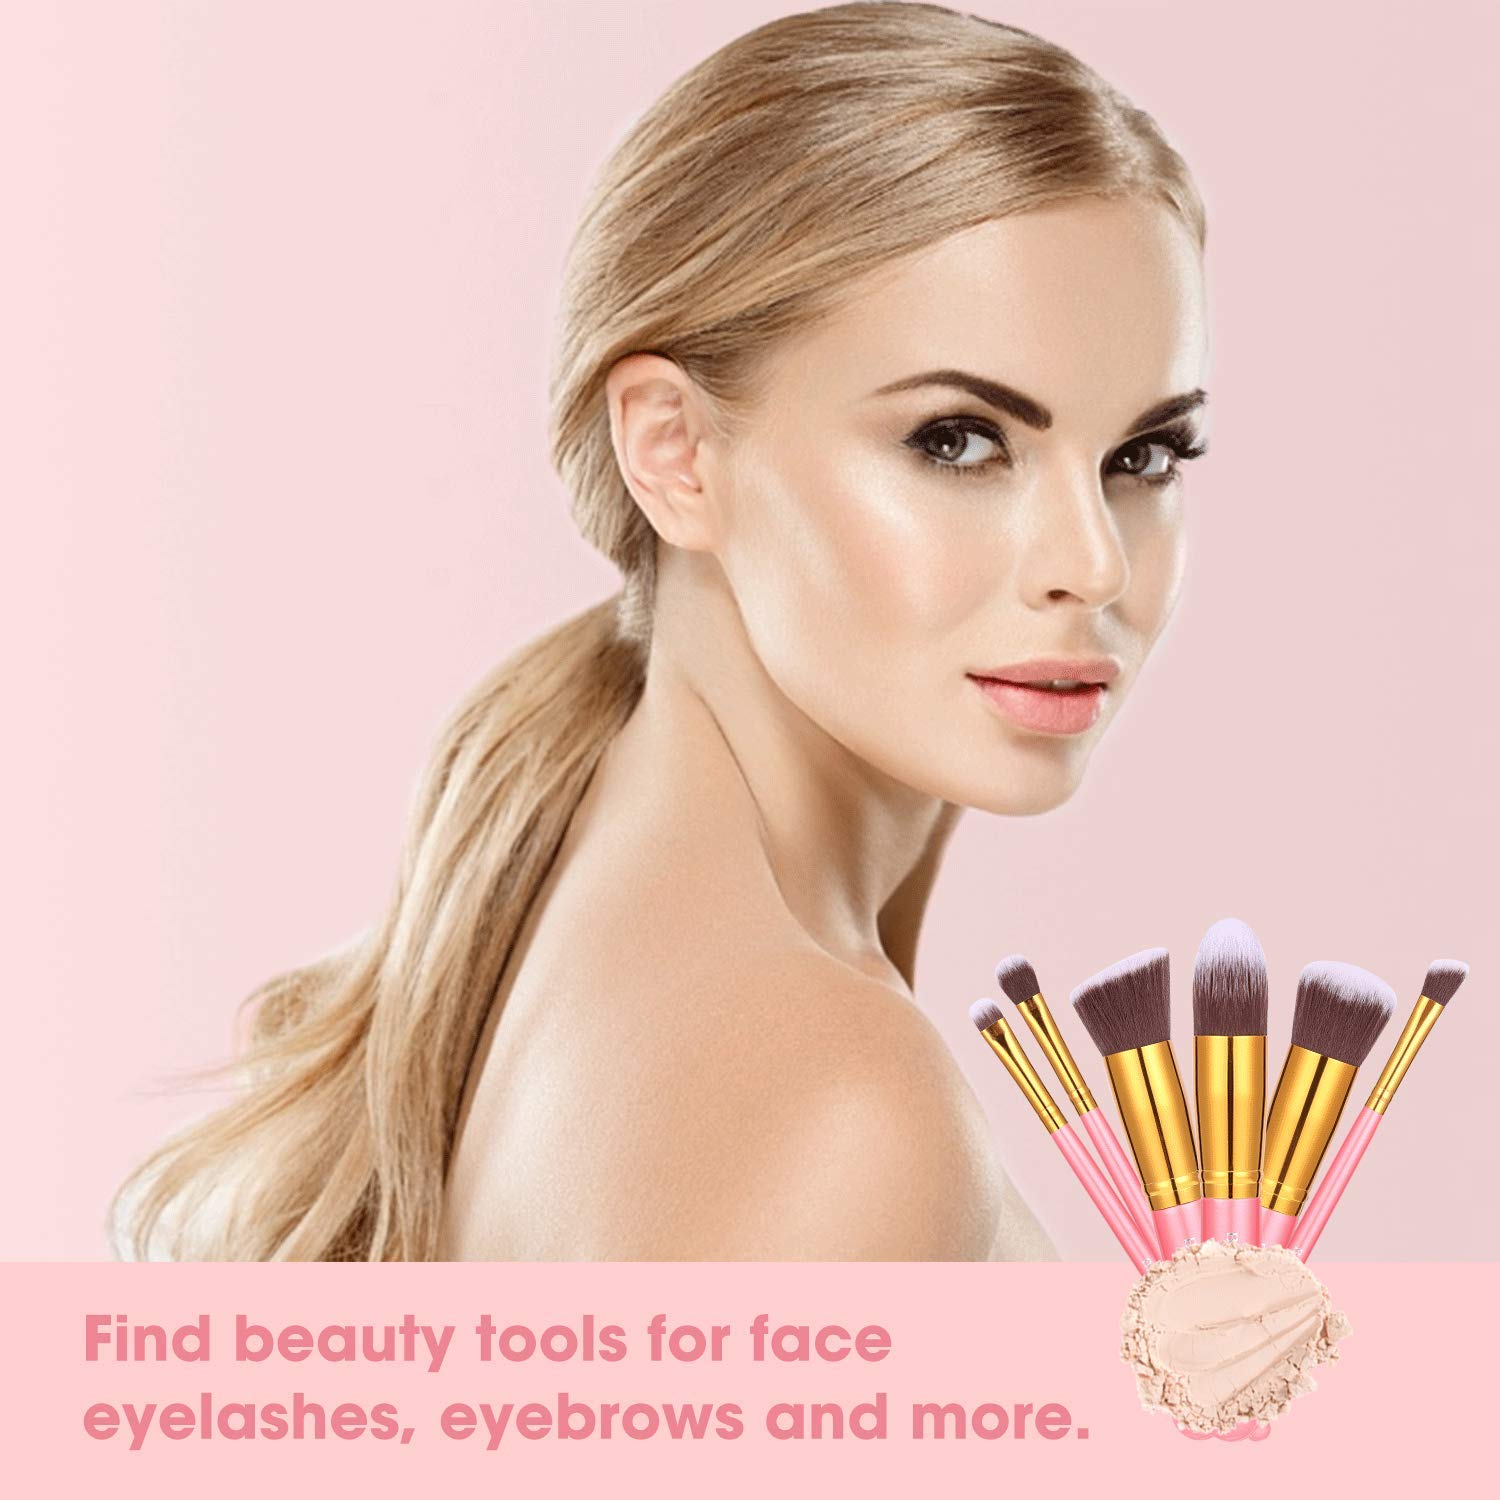 BS-MALL New 14 Pcs Makeup Brushes Premium Synthetic Kabuki Makeup Brush Set Cosmetics Foundation Blending Blush Eyeliner Face Powder Brush Makeup Brush Kit(golden Pink)